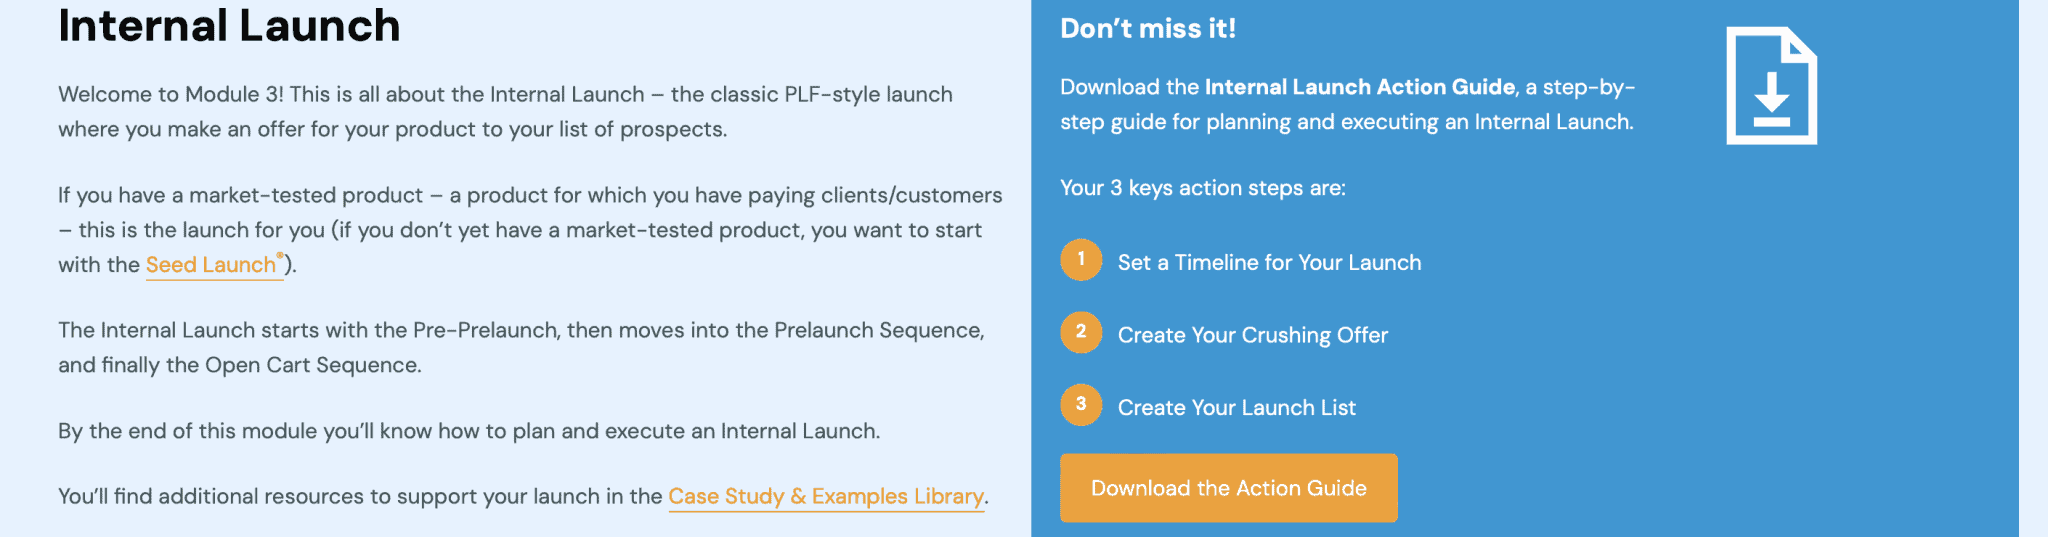 plf_module_3_internal_launch